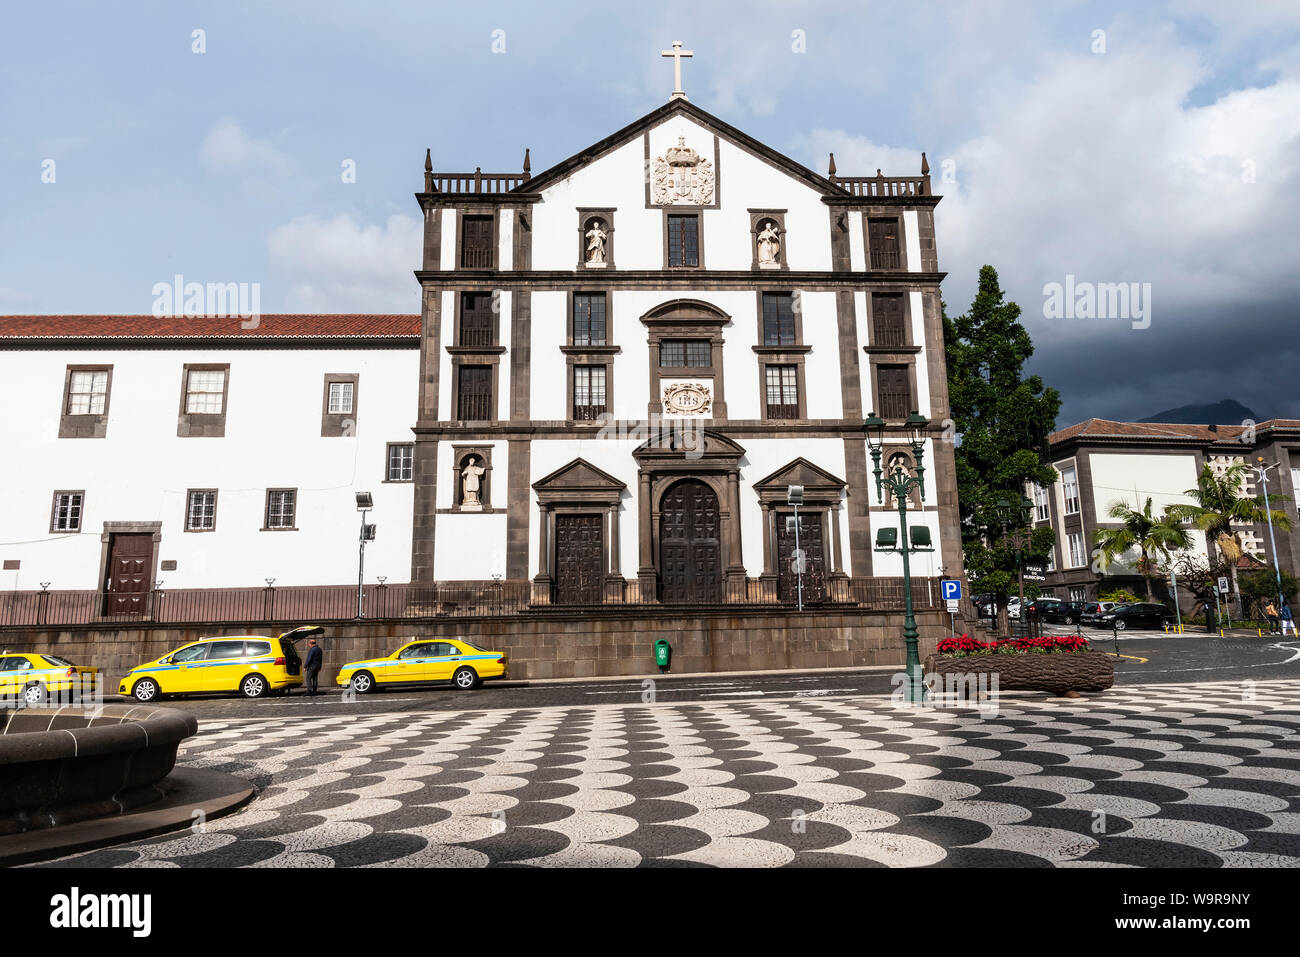 Igreja do Colegio church, Funchal, Madeira, Portugal Stock Photo